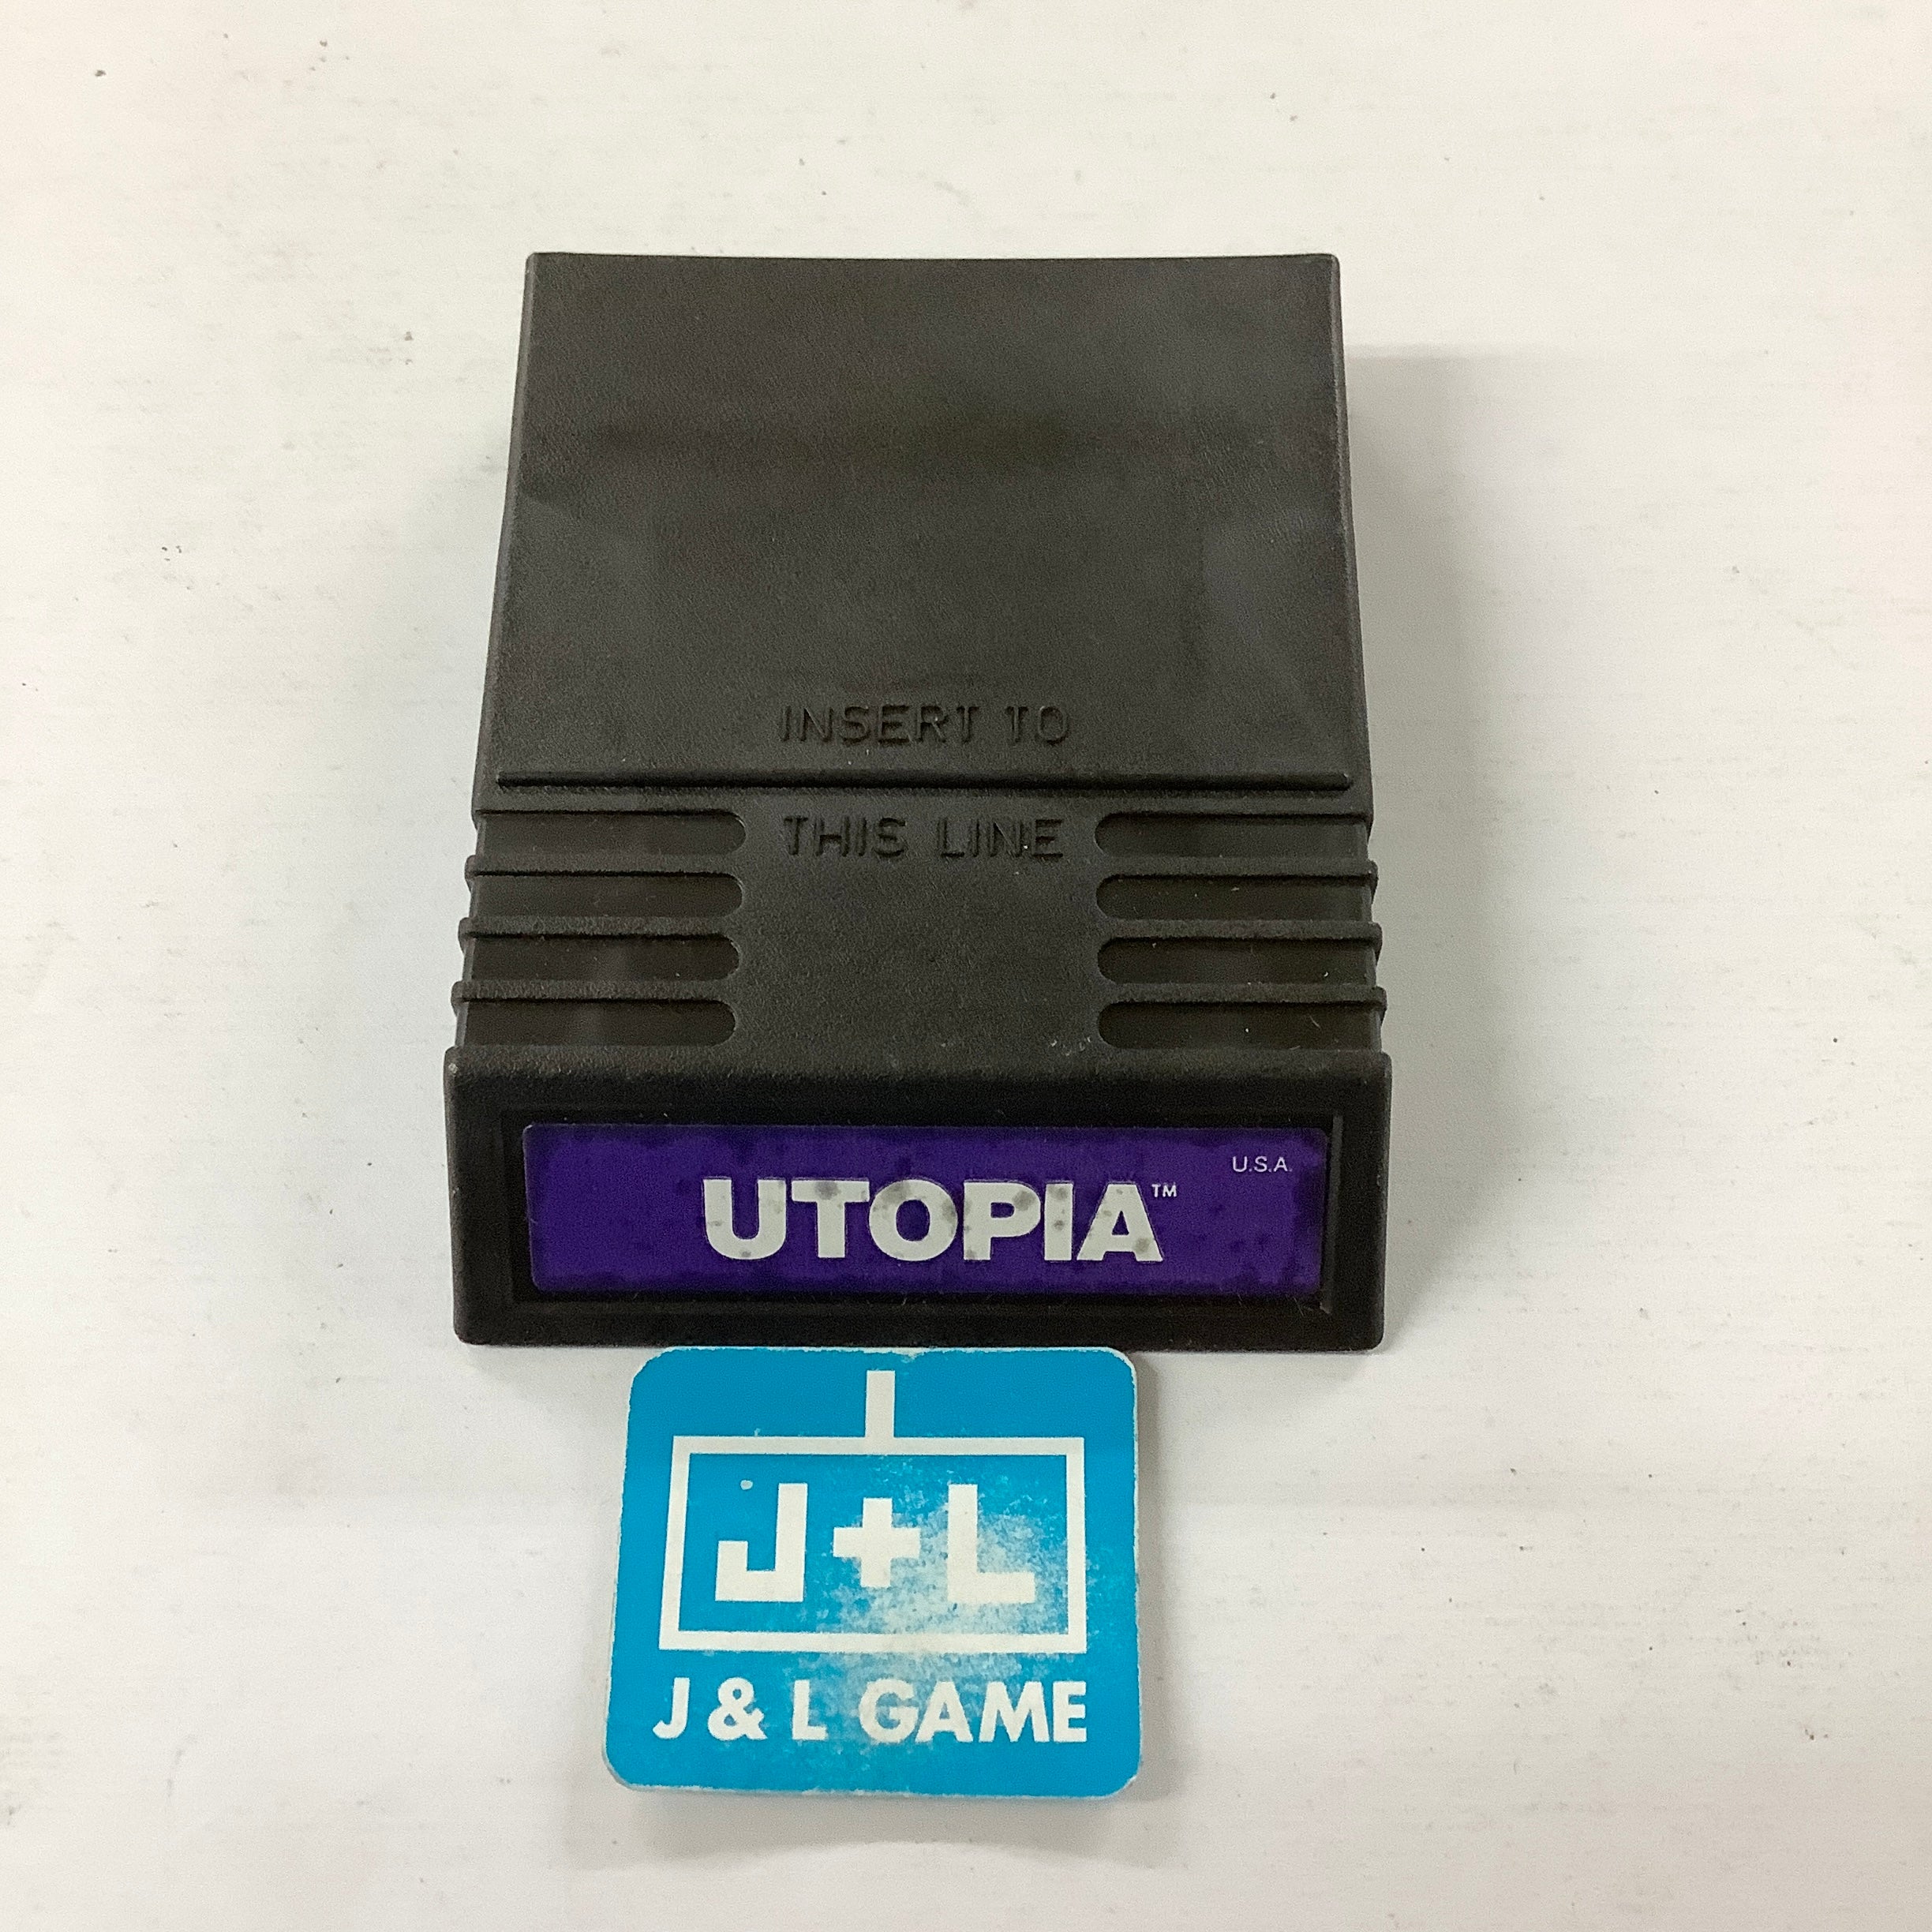 Utopia - (INTV) Intellivision [Pre-Owned] Video Games Mattel   